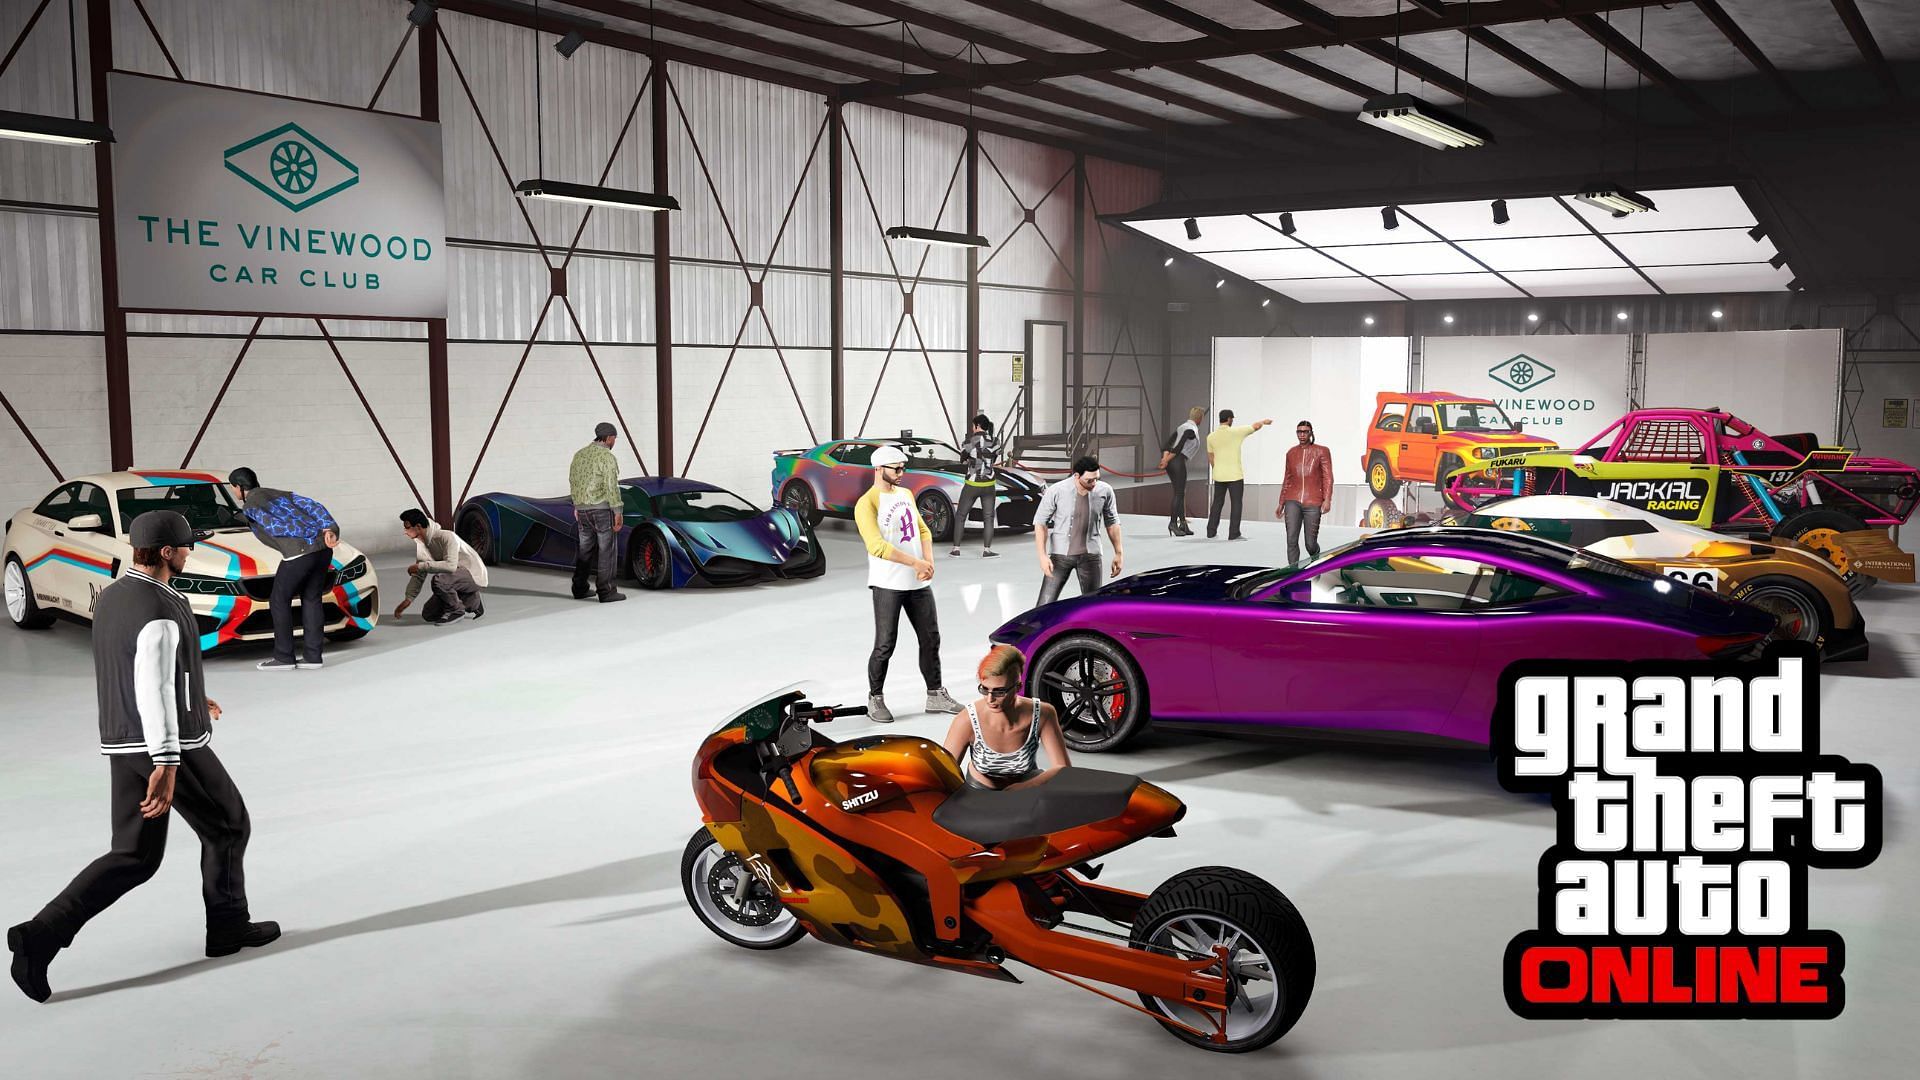 Vinewood Car Club Garage GTA+ members